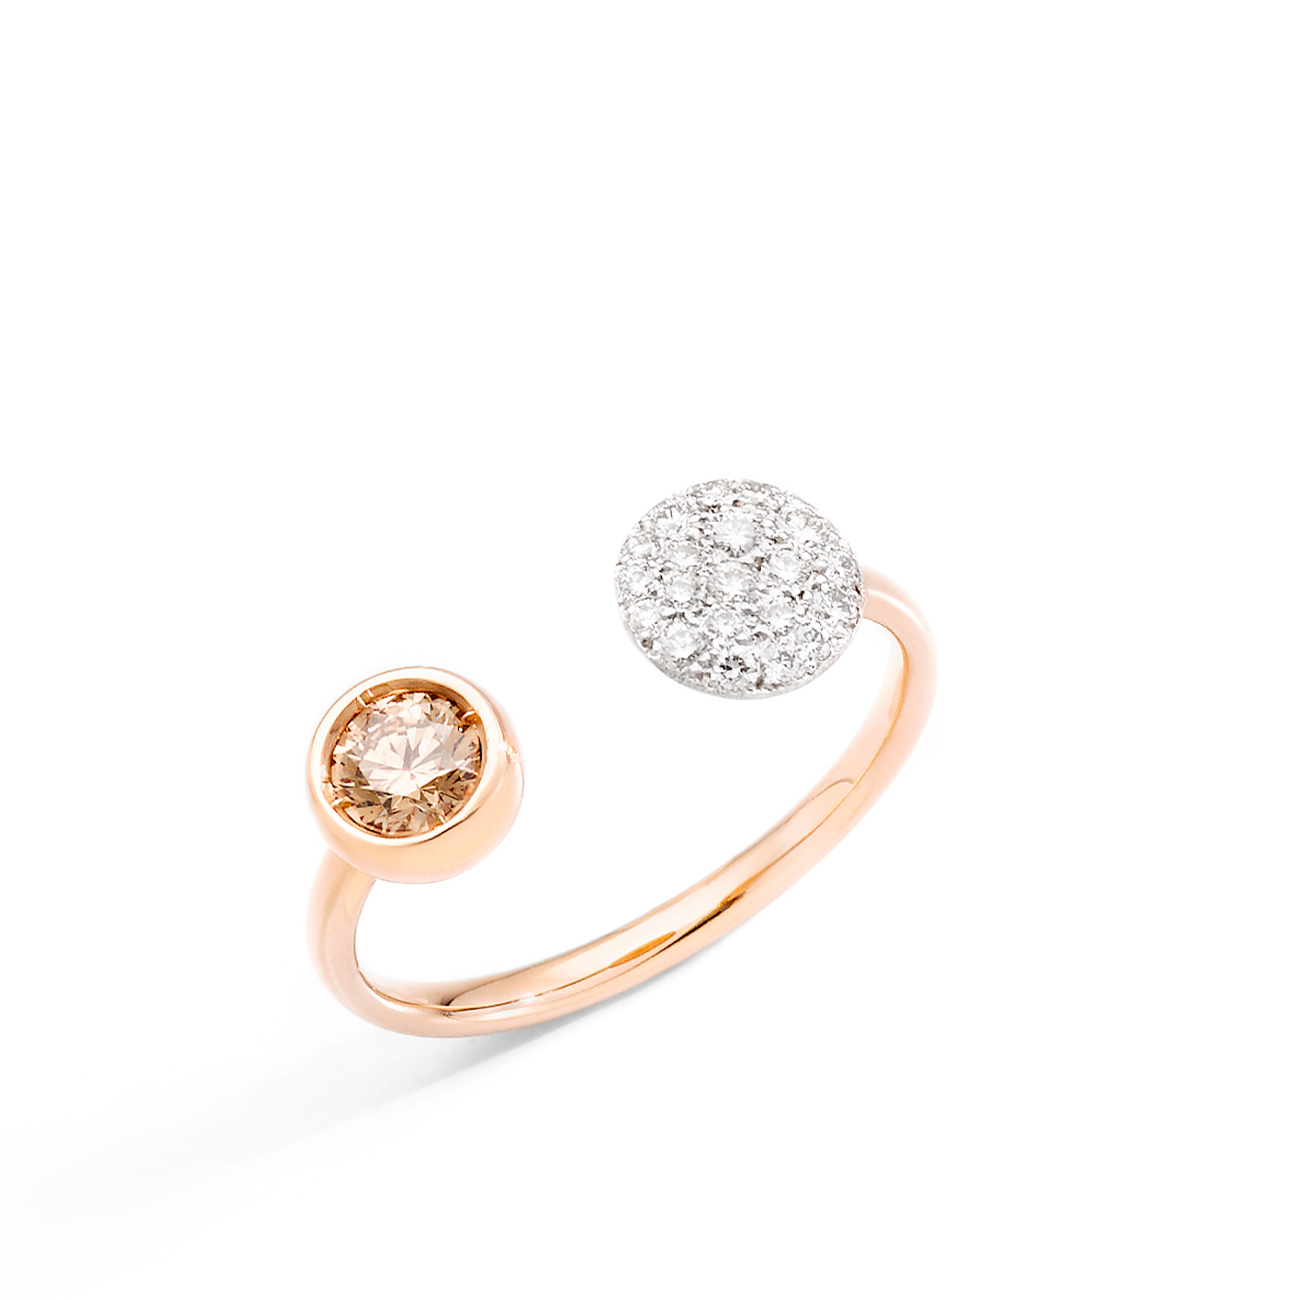 Pomellato Sabbia Ring with a Brown Diamond Solitaire and White Diamonds